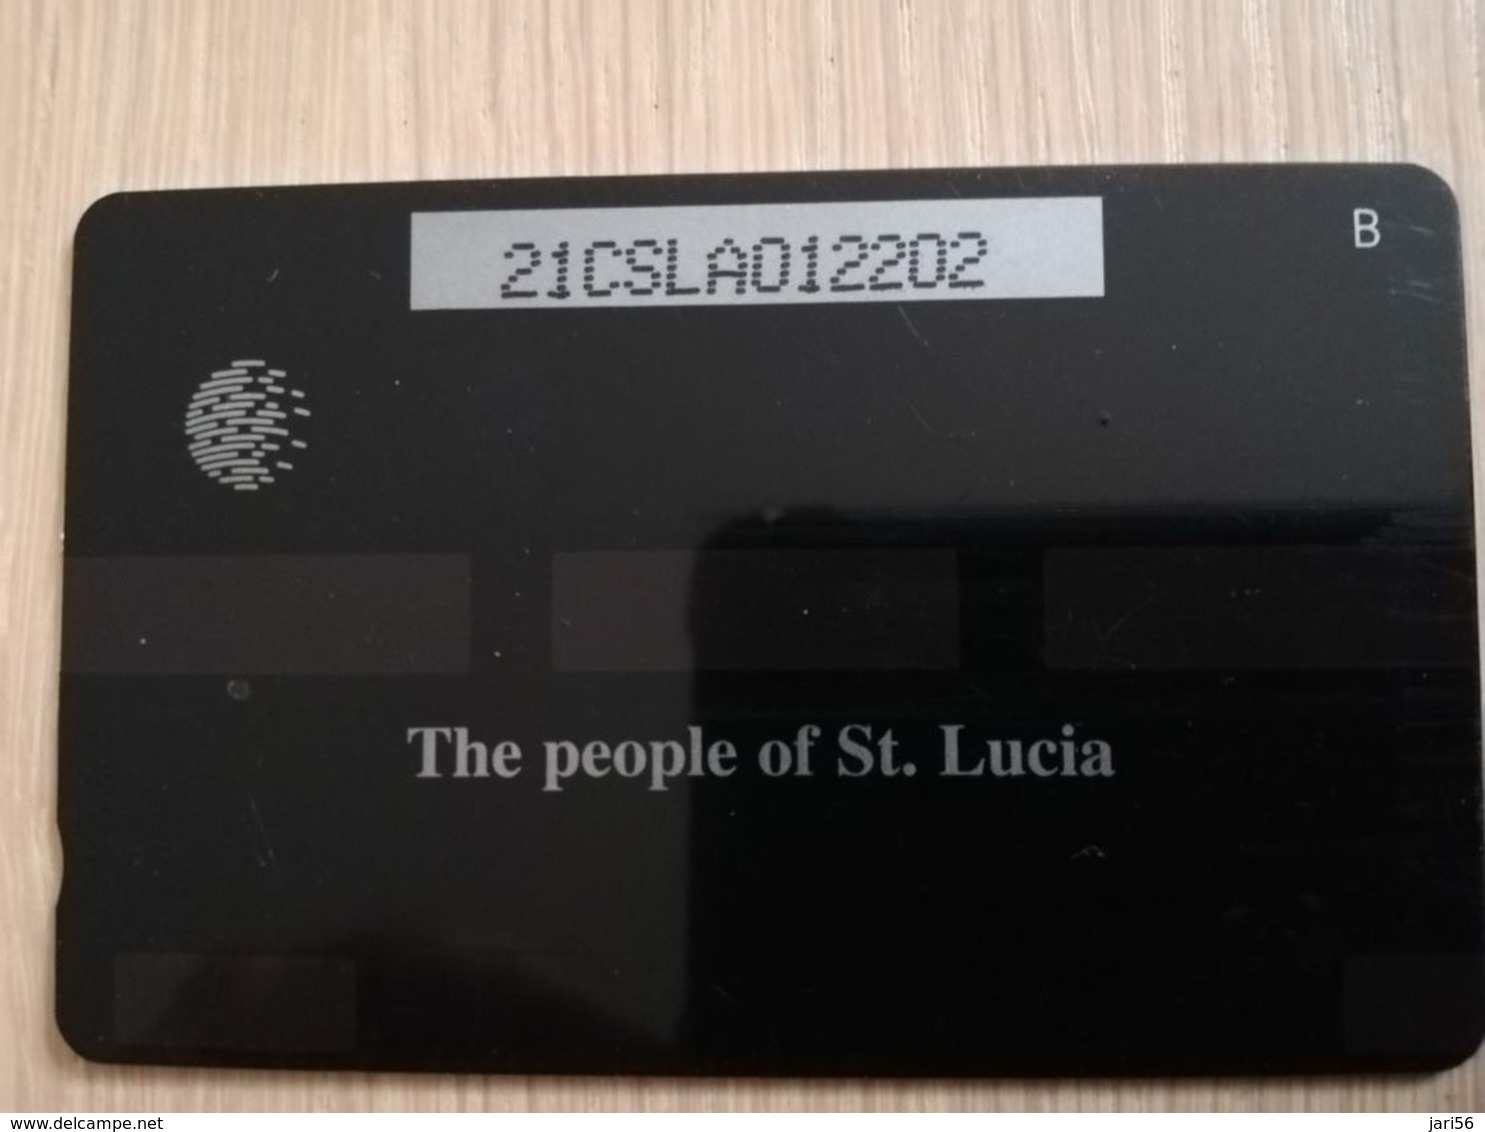 ST LUCIA    $ 10   CABLE & WIRELESS  STL-21A  21CSLA       Fine Used Card ** 2421** - Saint Lucia